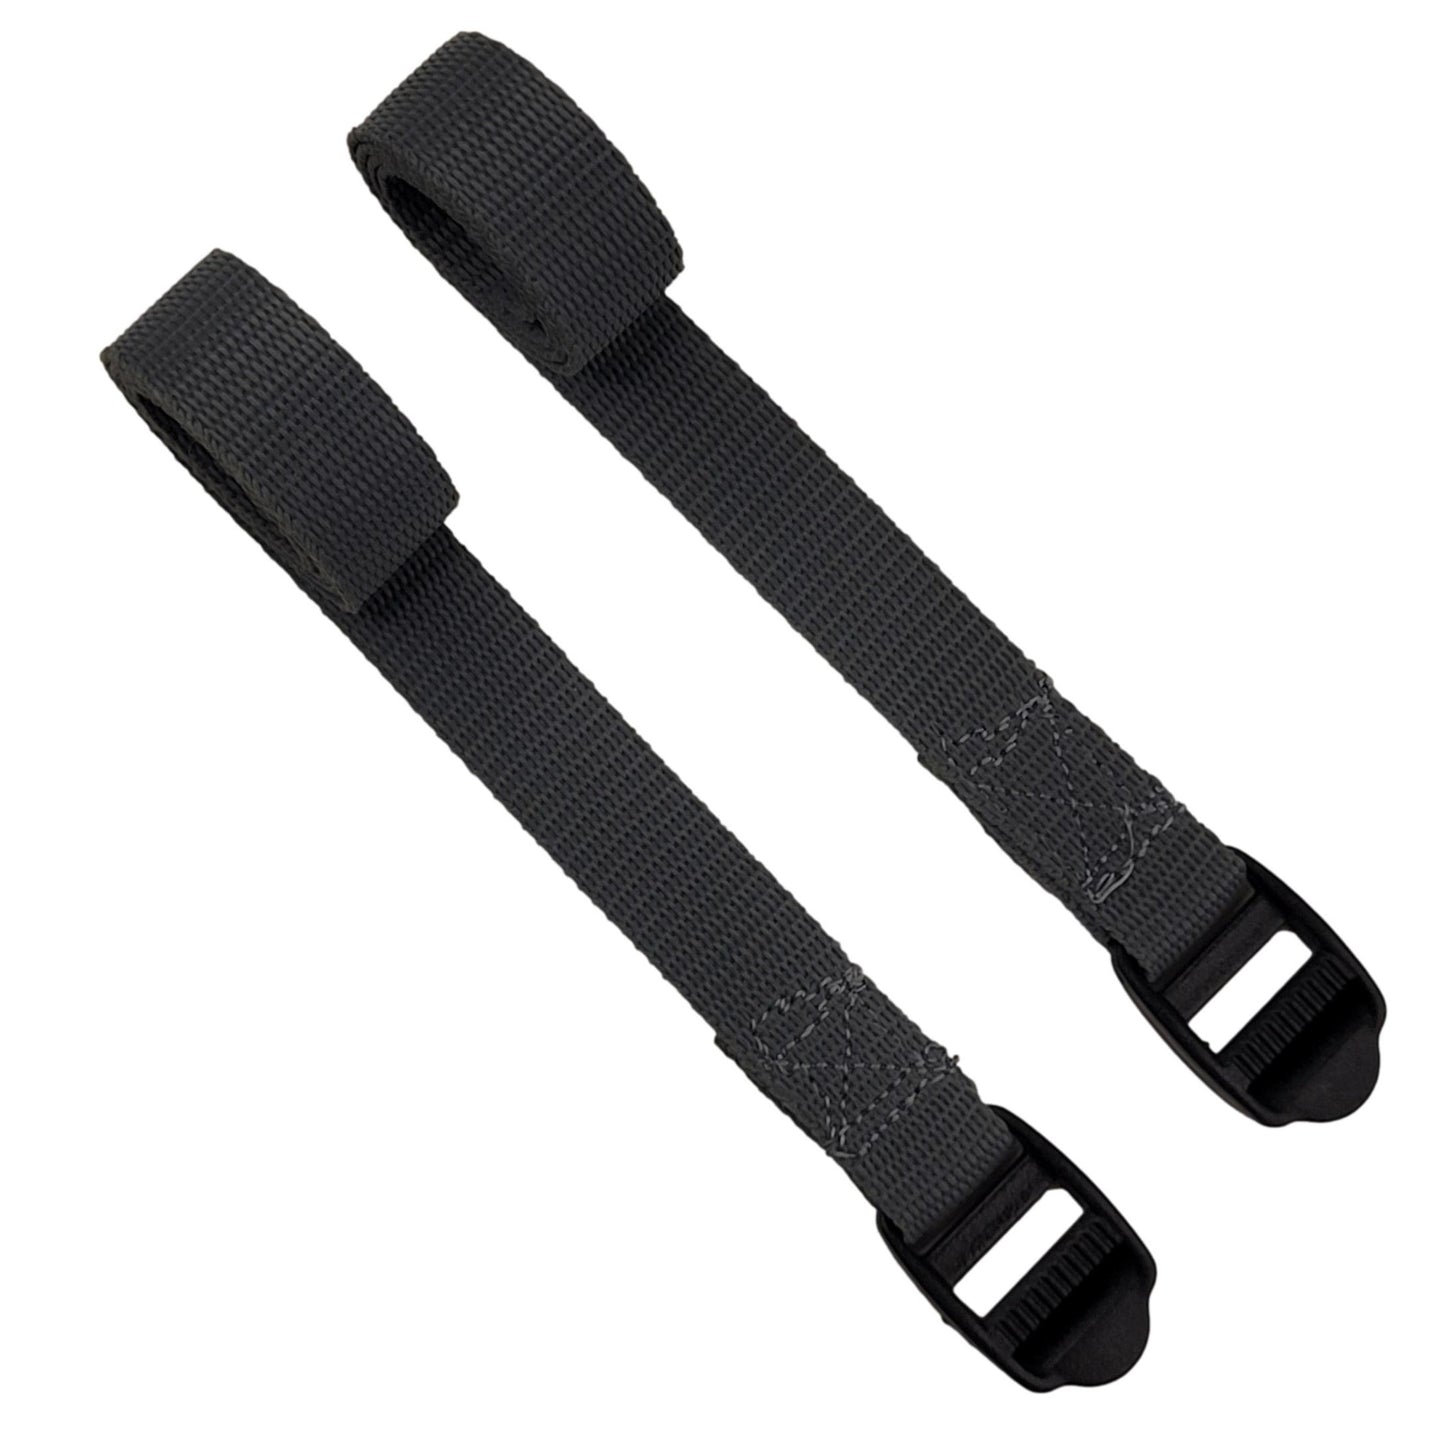 19mm webbing strap in grey with ladderlock buckle (pair) (3)